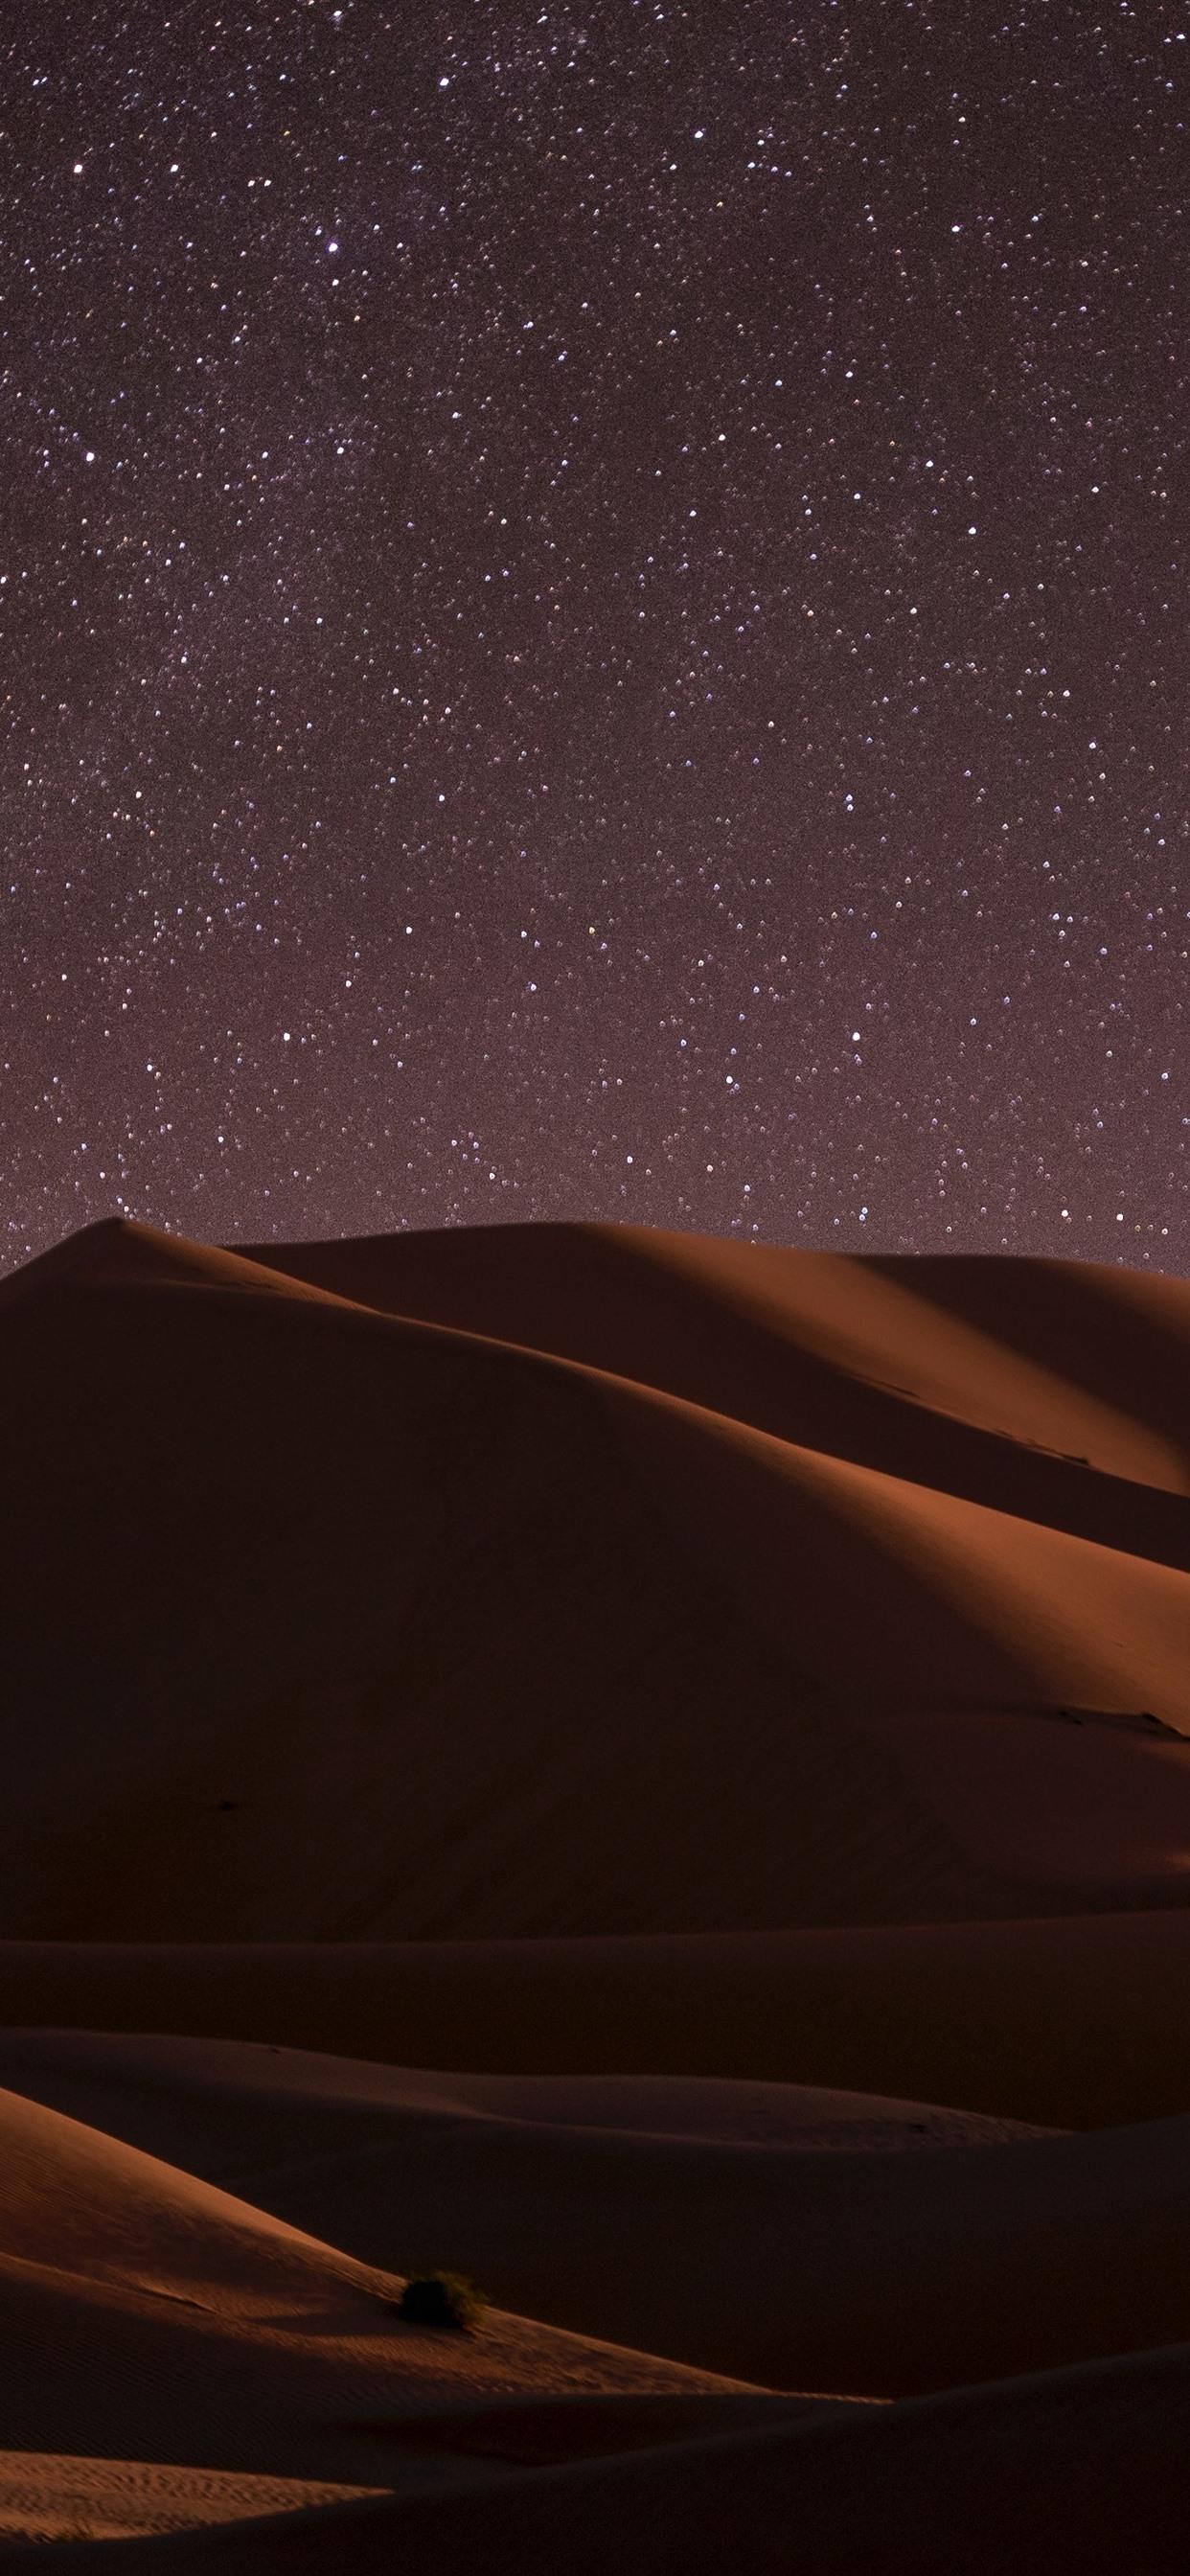 Desert, Night, Dune, Starry, Stars 1242x2688 IPhone 11 Pro XS Max Wallpaper, Background, Picture, Image